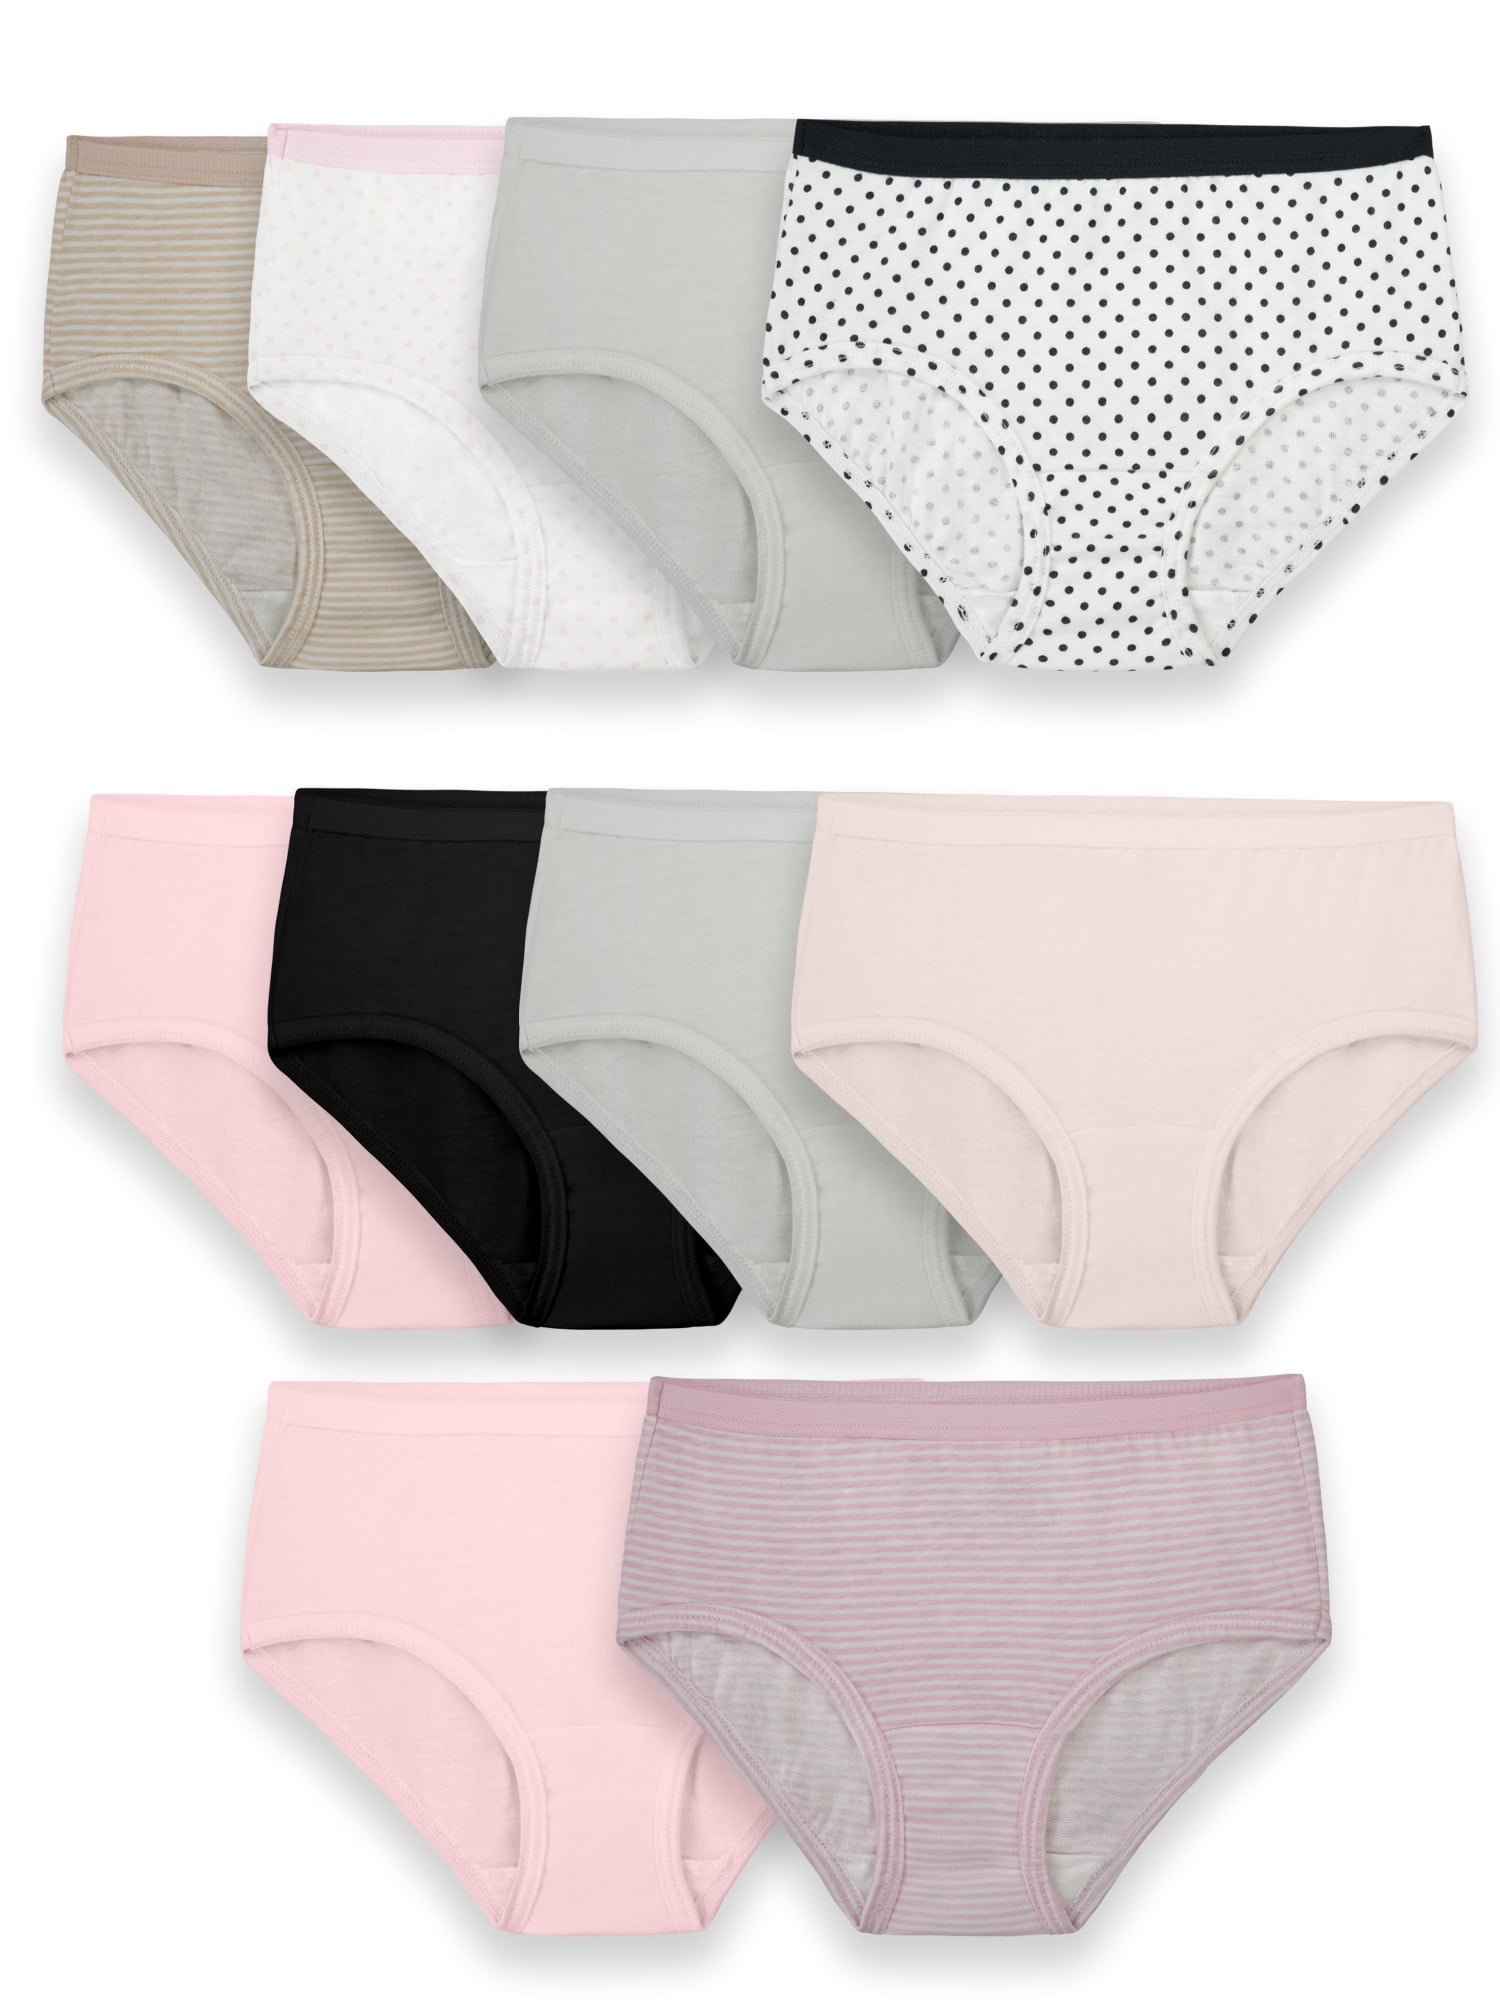 Fruit of the Loom Girls' Cotton Brief Underwear, 10 Pack Panties, Sizes 4-16